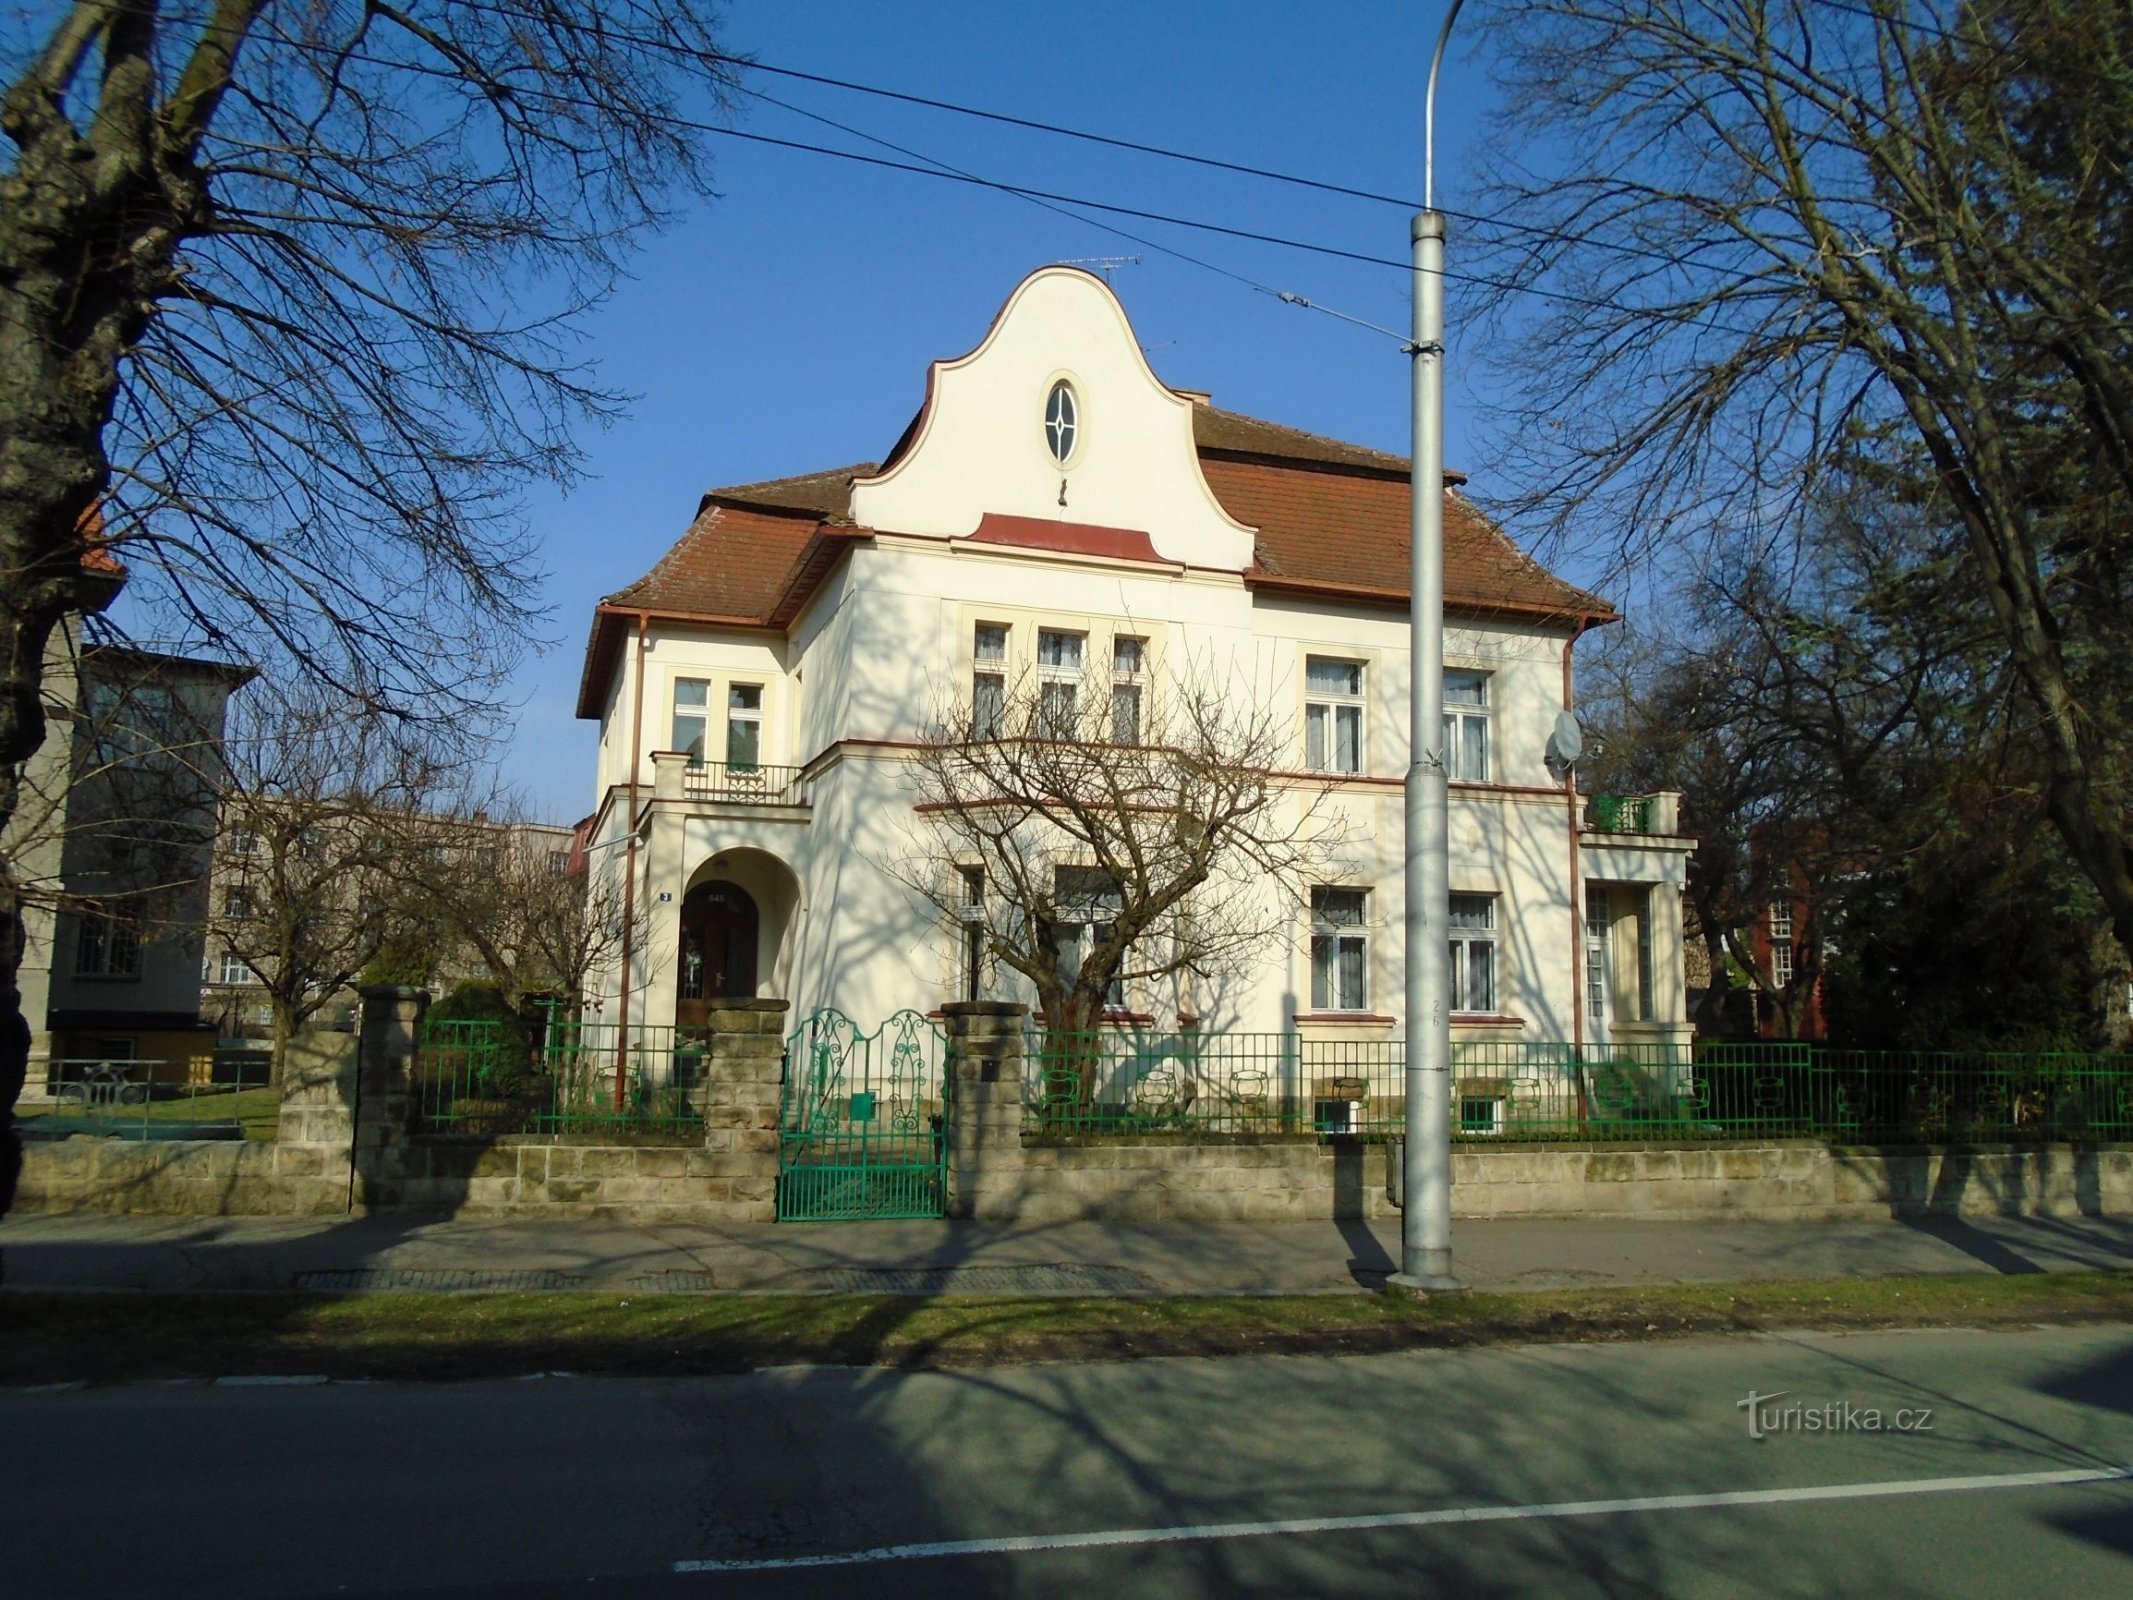 Schloss Nr. 545 (Hradec Králové, 1.4.2018. April XNUMX)